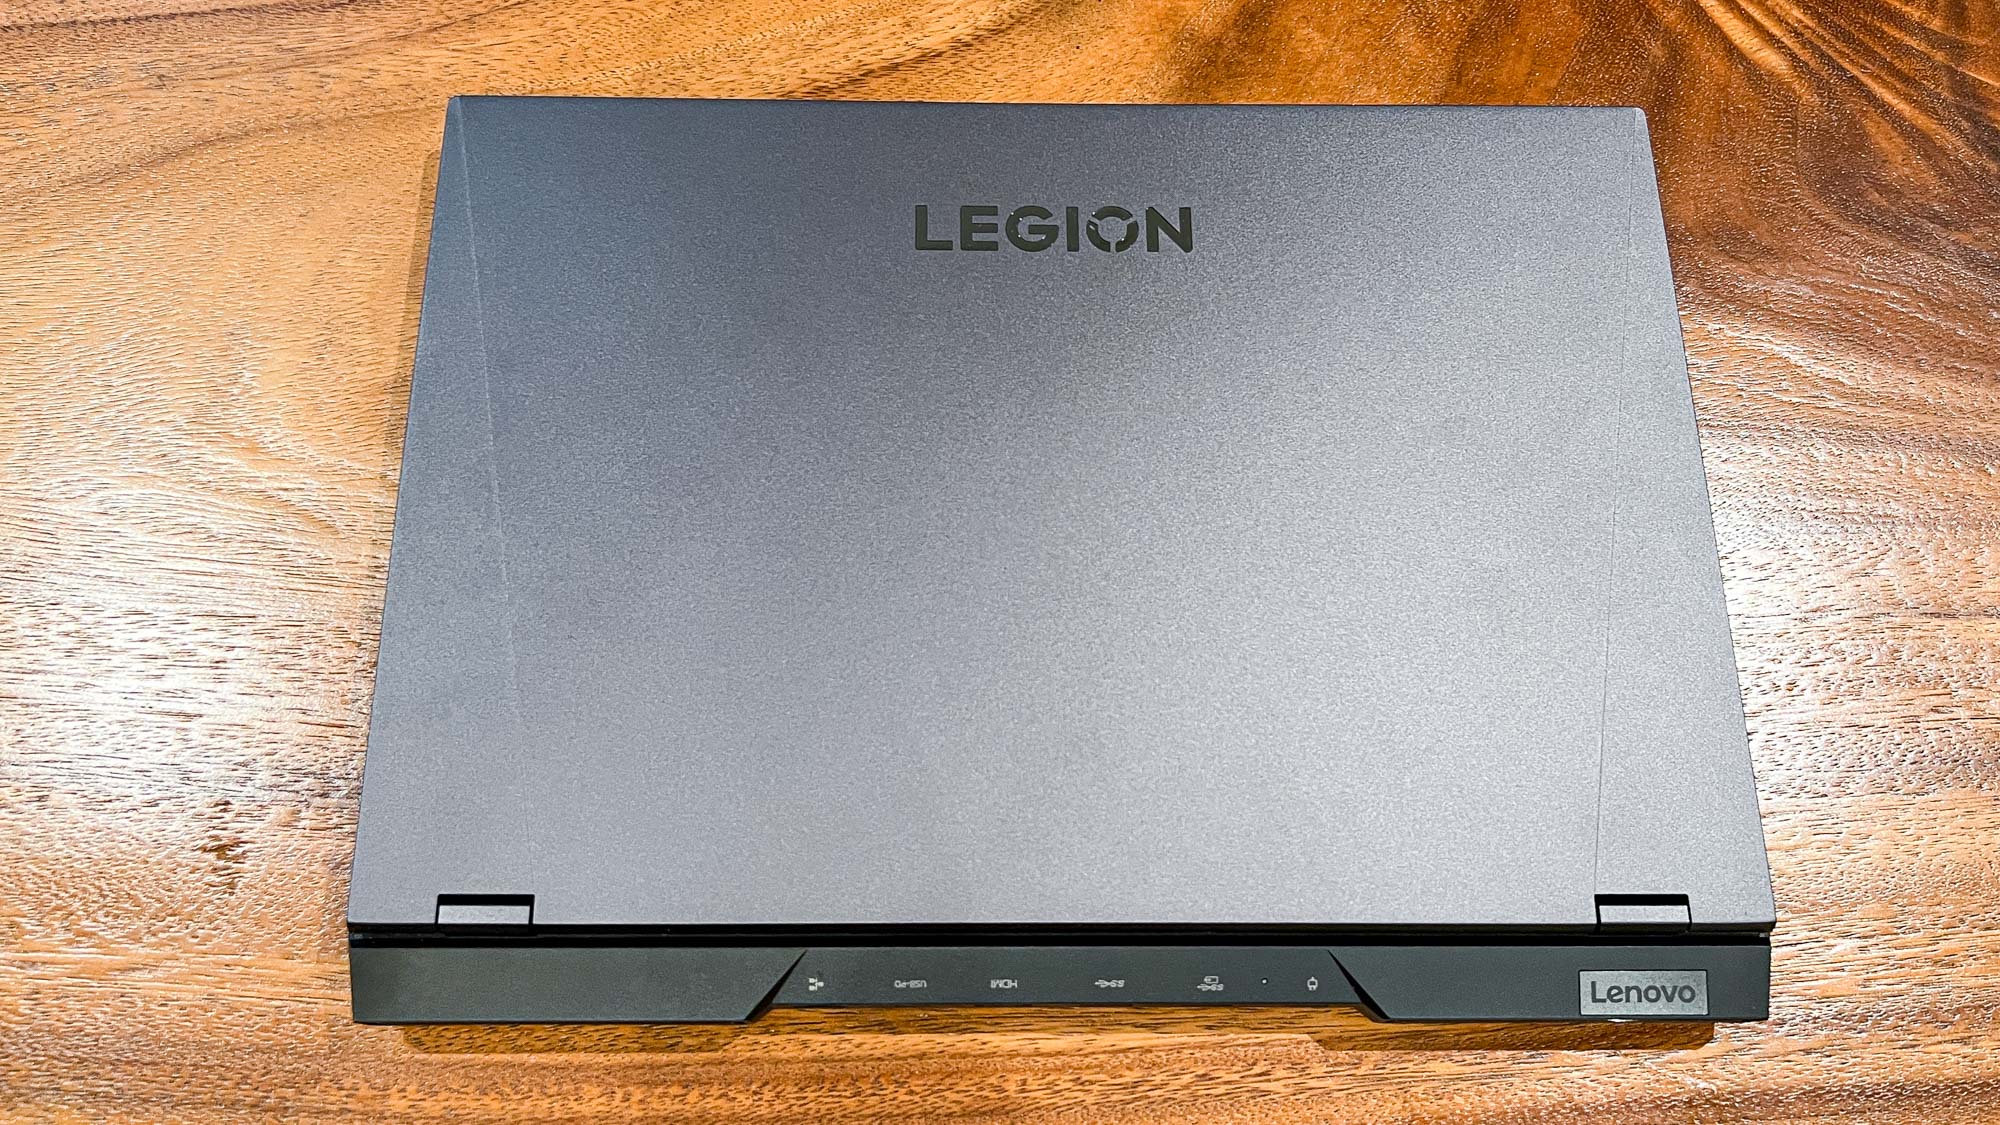 Lenovo Legion 5i Pro review unit on desk